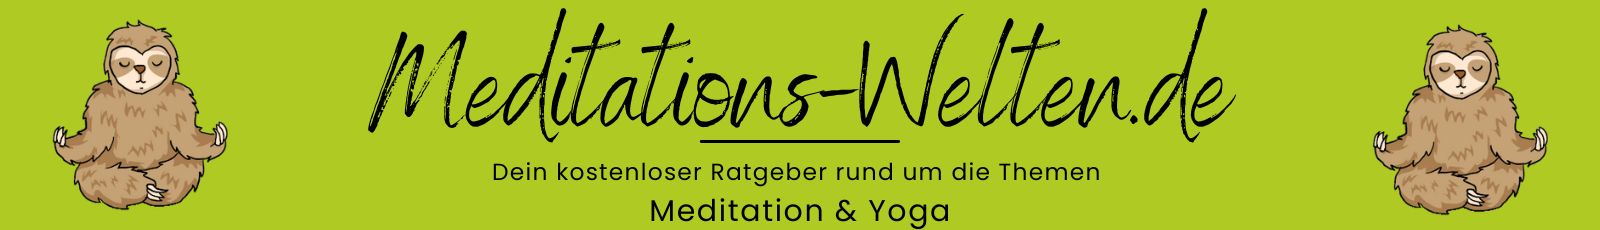 Meditations-Welten.de